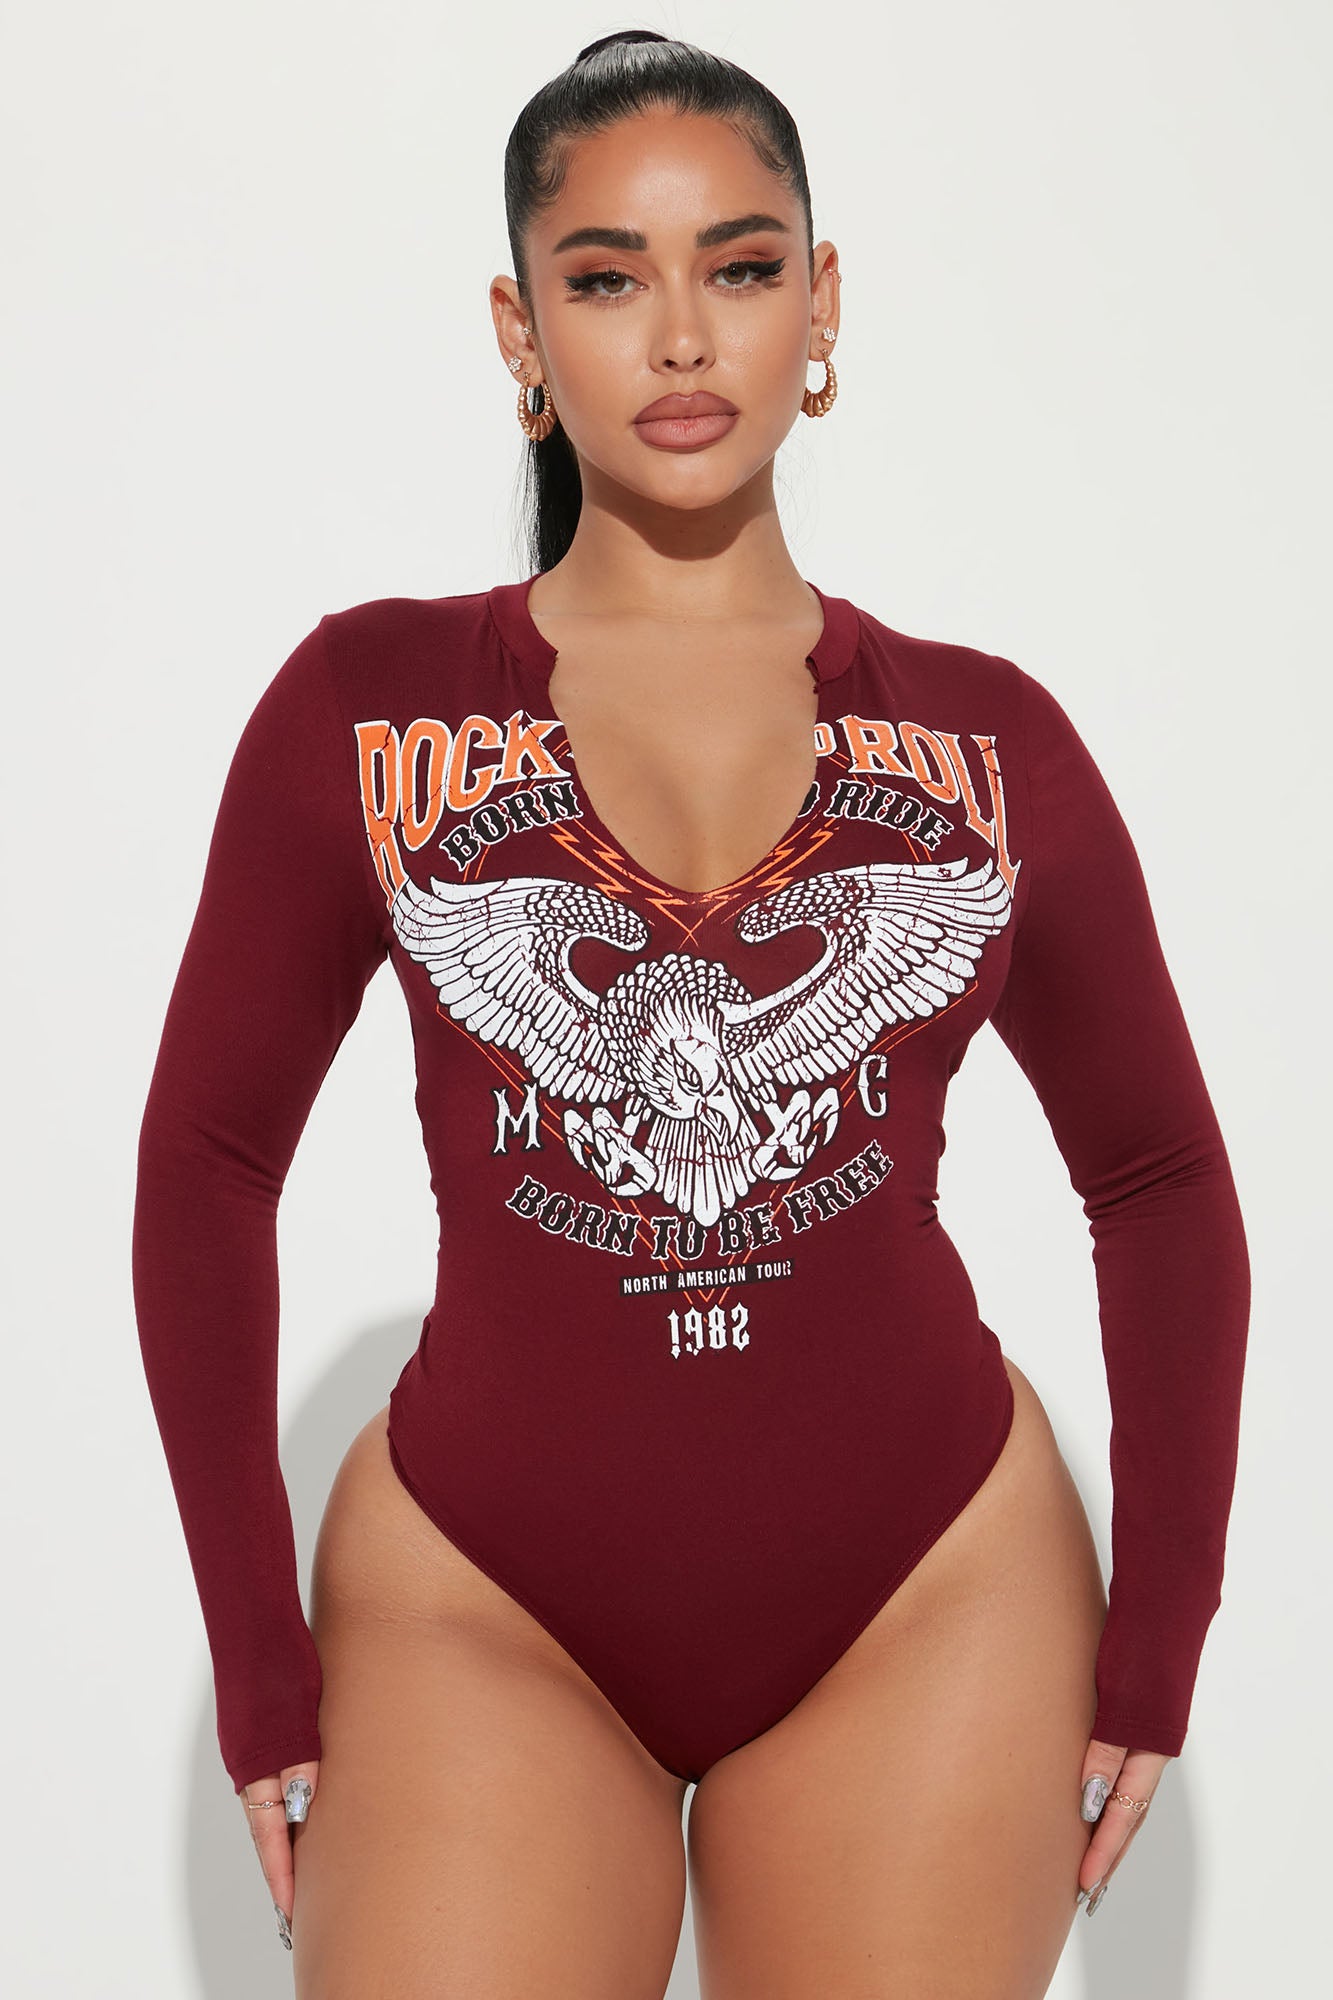 Rocker Chic Graphic Bodysuit - Burgundy, Fashion Nova, Screens Tops and  Bottoms